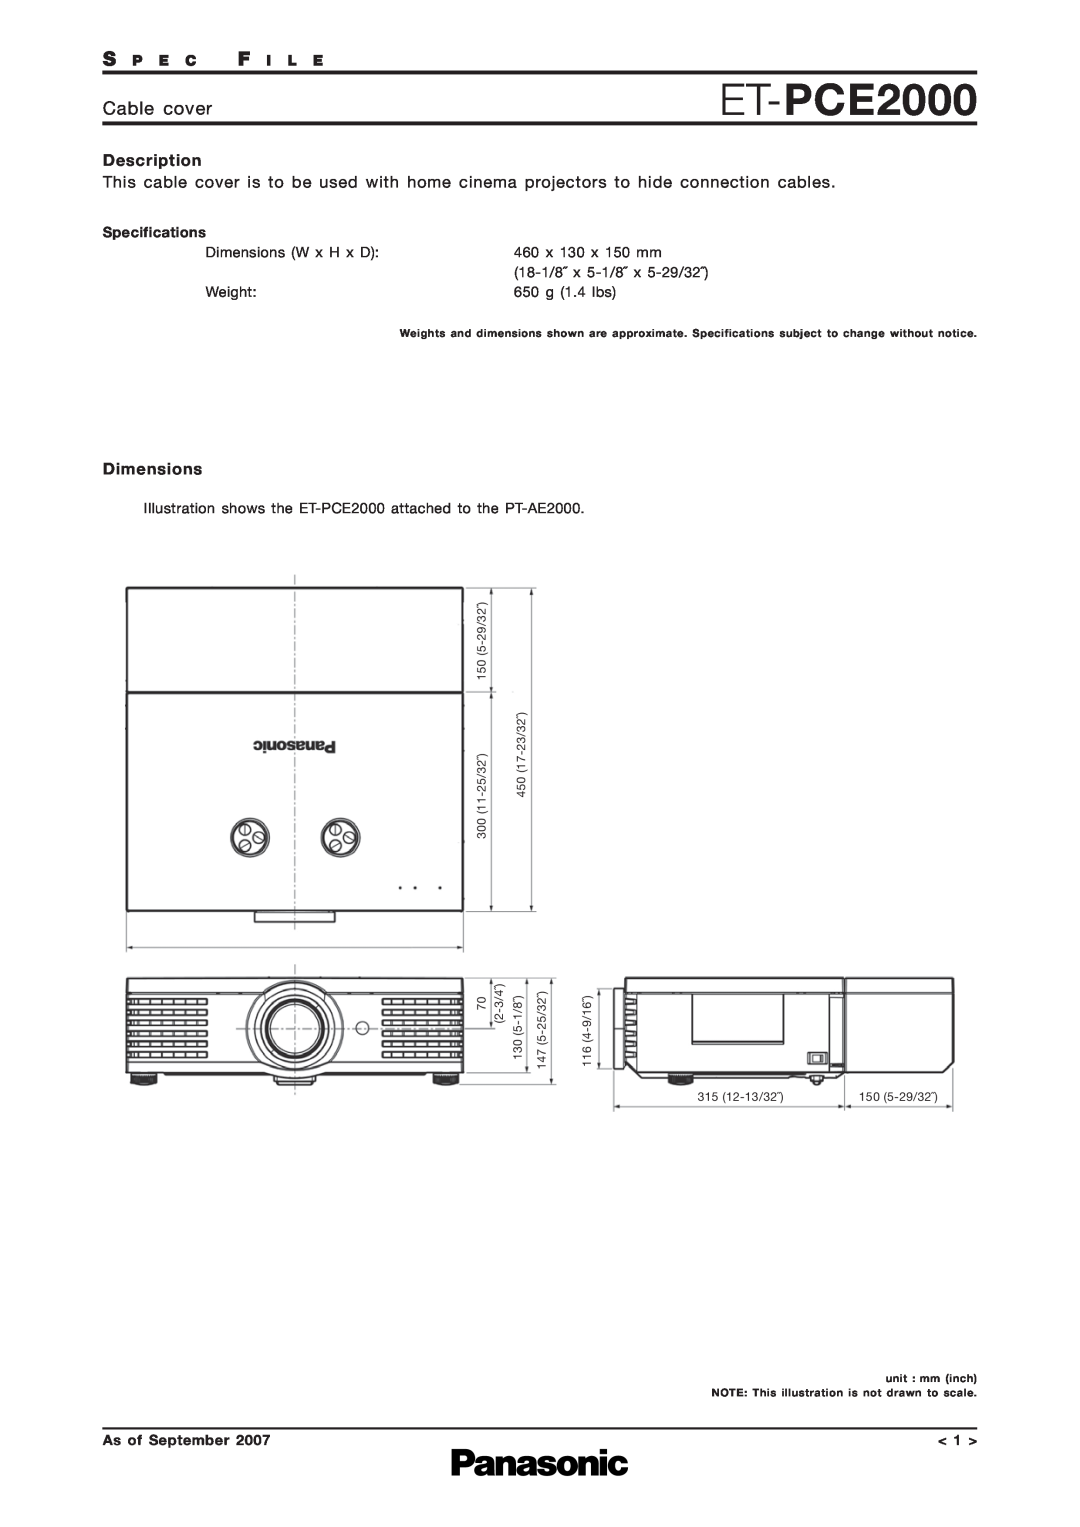 Panasonic ET-PCE2000 dimensions Cable cover, Description, Dimensions, S P E C F I L E, Specifications, x 130 x 150 mm 